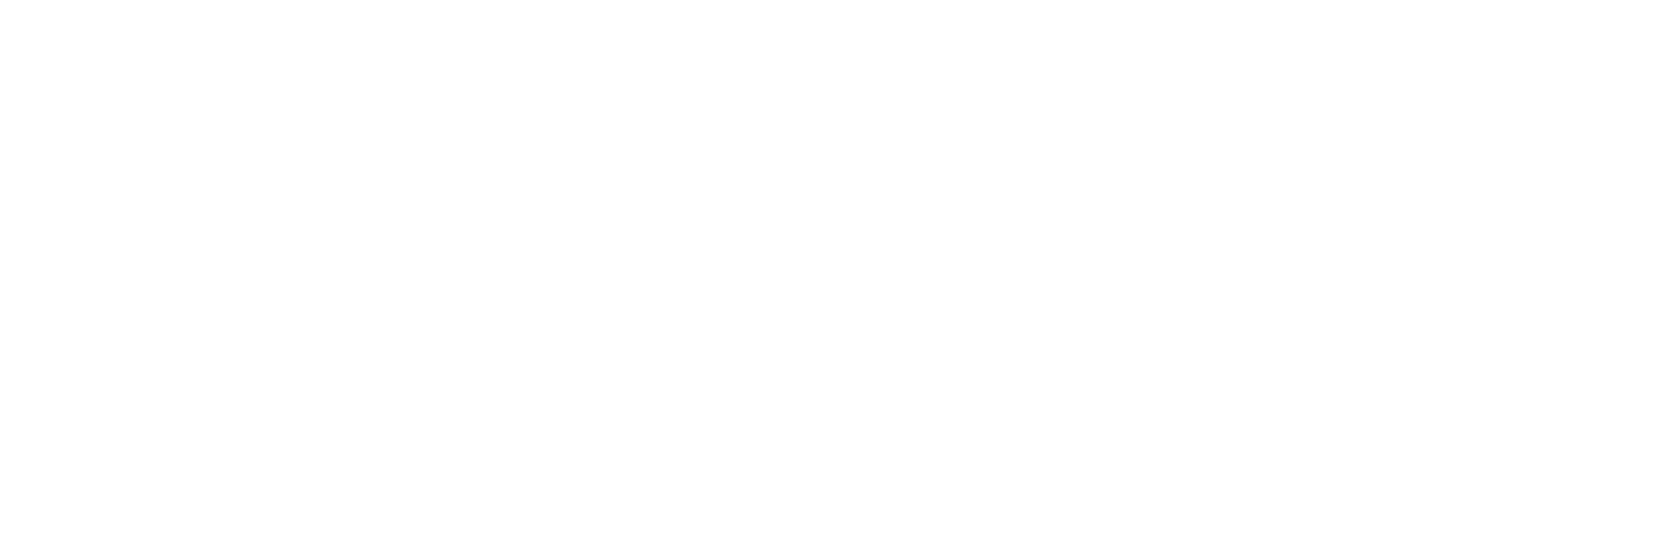 Representative Jim Hagedorn